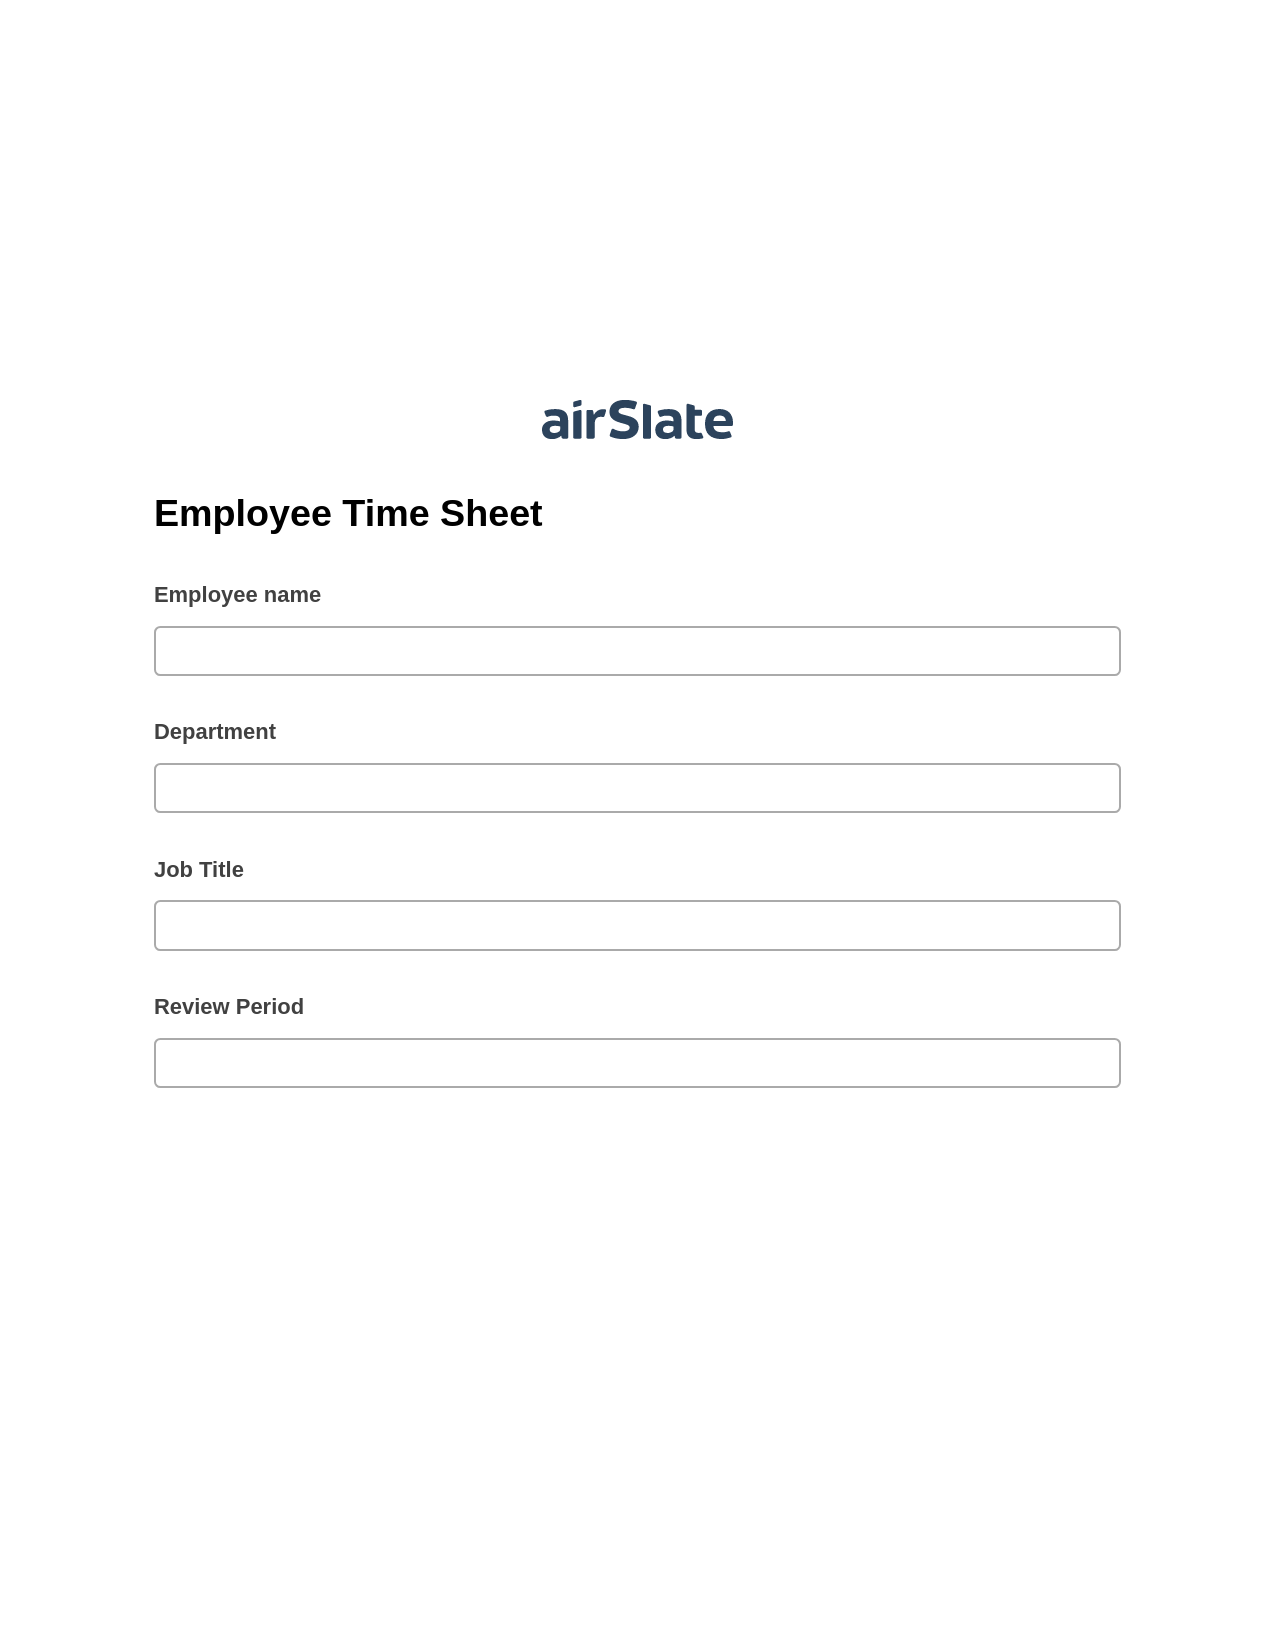 Multirole Employee Time Sheet System Bot - Slack Two-Way Binding Bot, Remove Slate Bot, Post-finish Document Bot